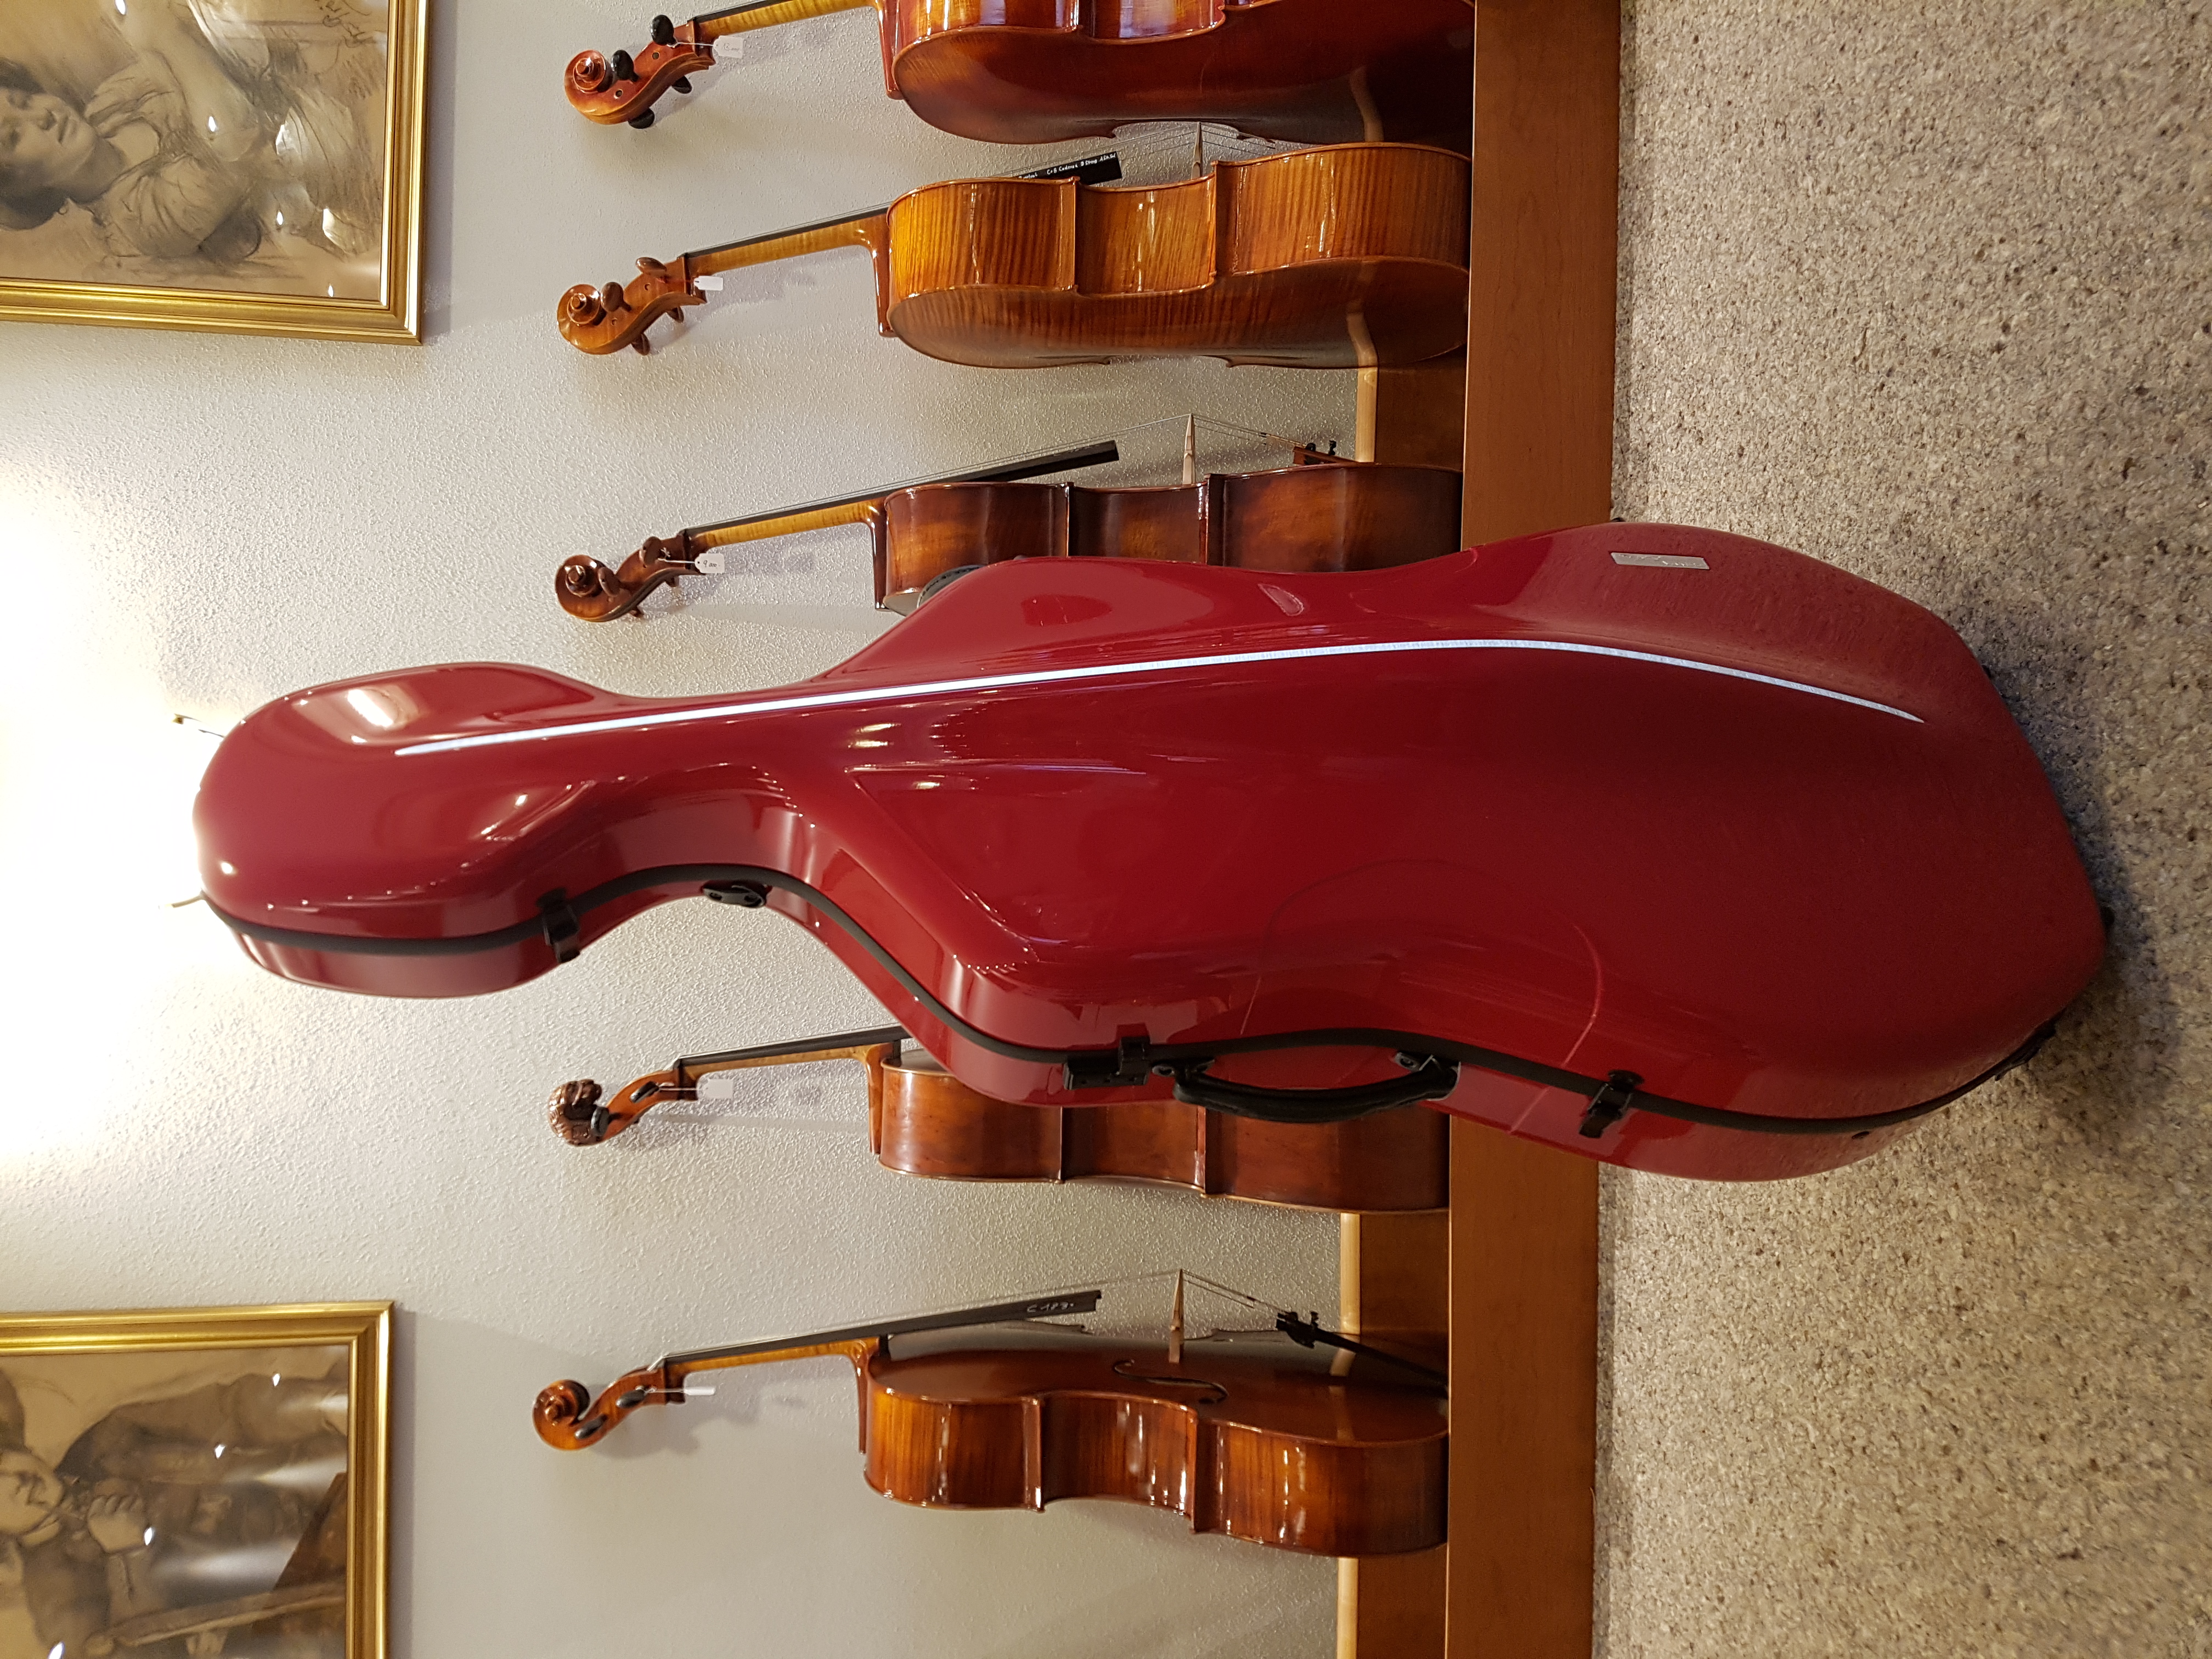 Gewa Air - Celloetui in Rot/Schwarz